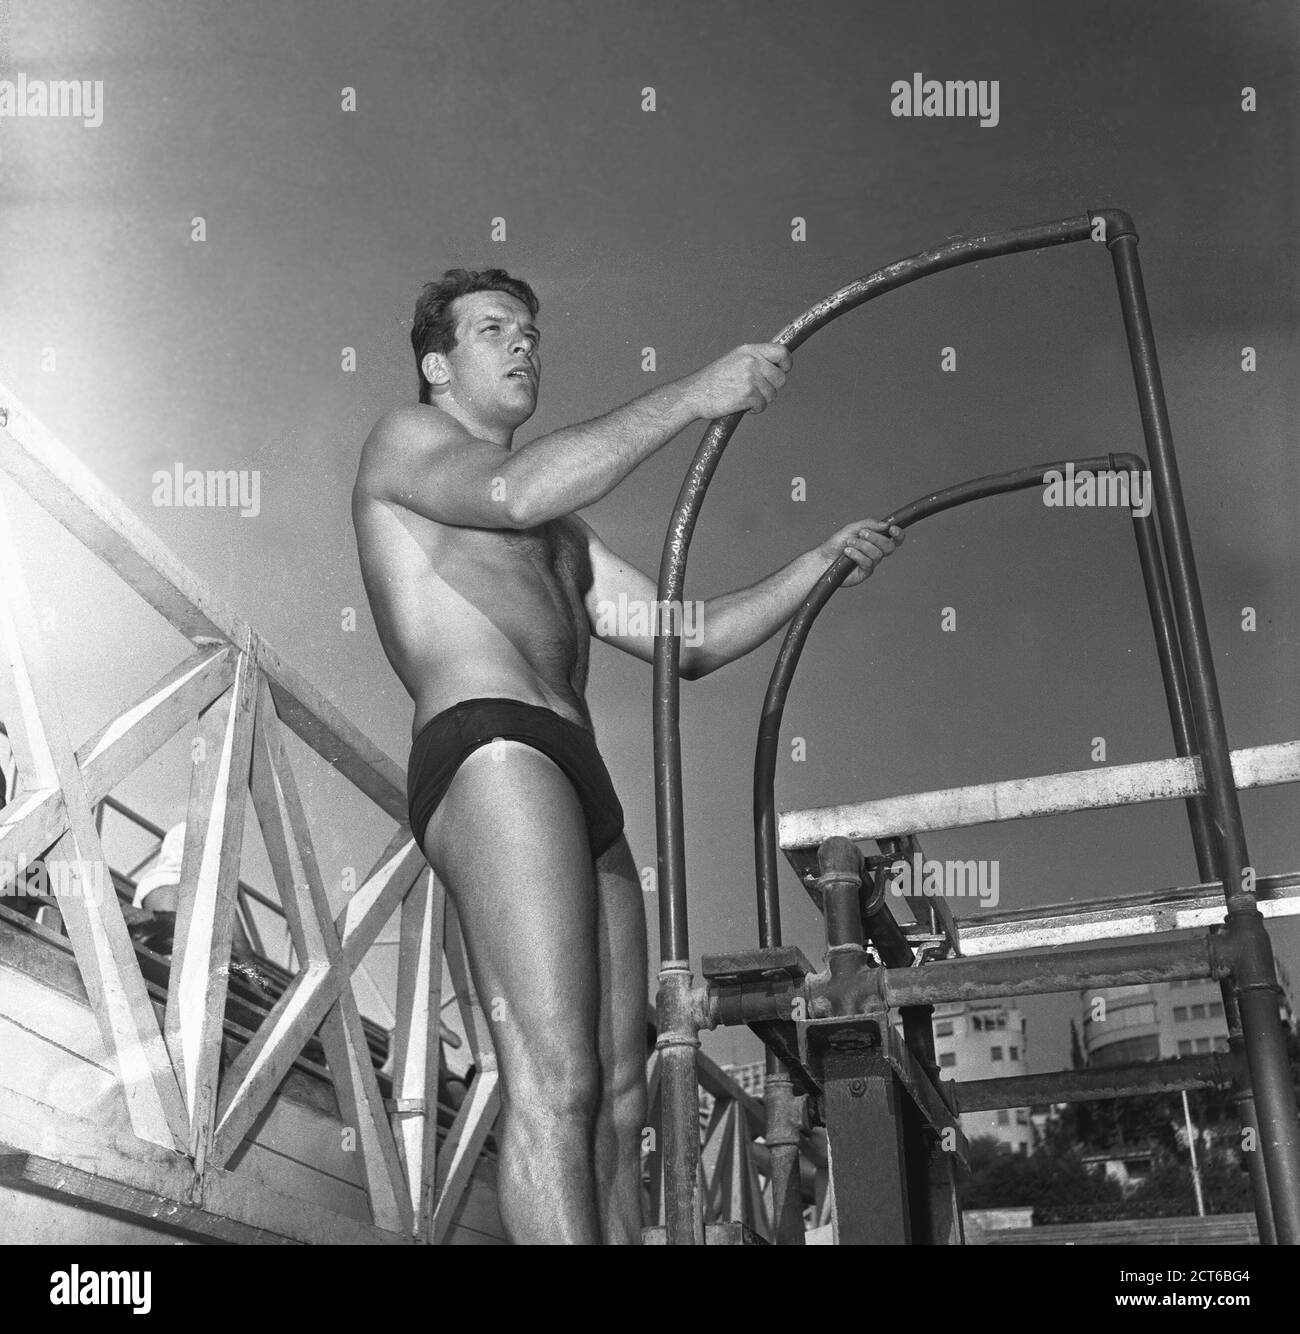 Carlo Pedersoli, alias Bud Spencer, Training am Lido für die Olympischen  Spiele, Bergamo, 2. juli 1952 Stockfotografie - Alamy